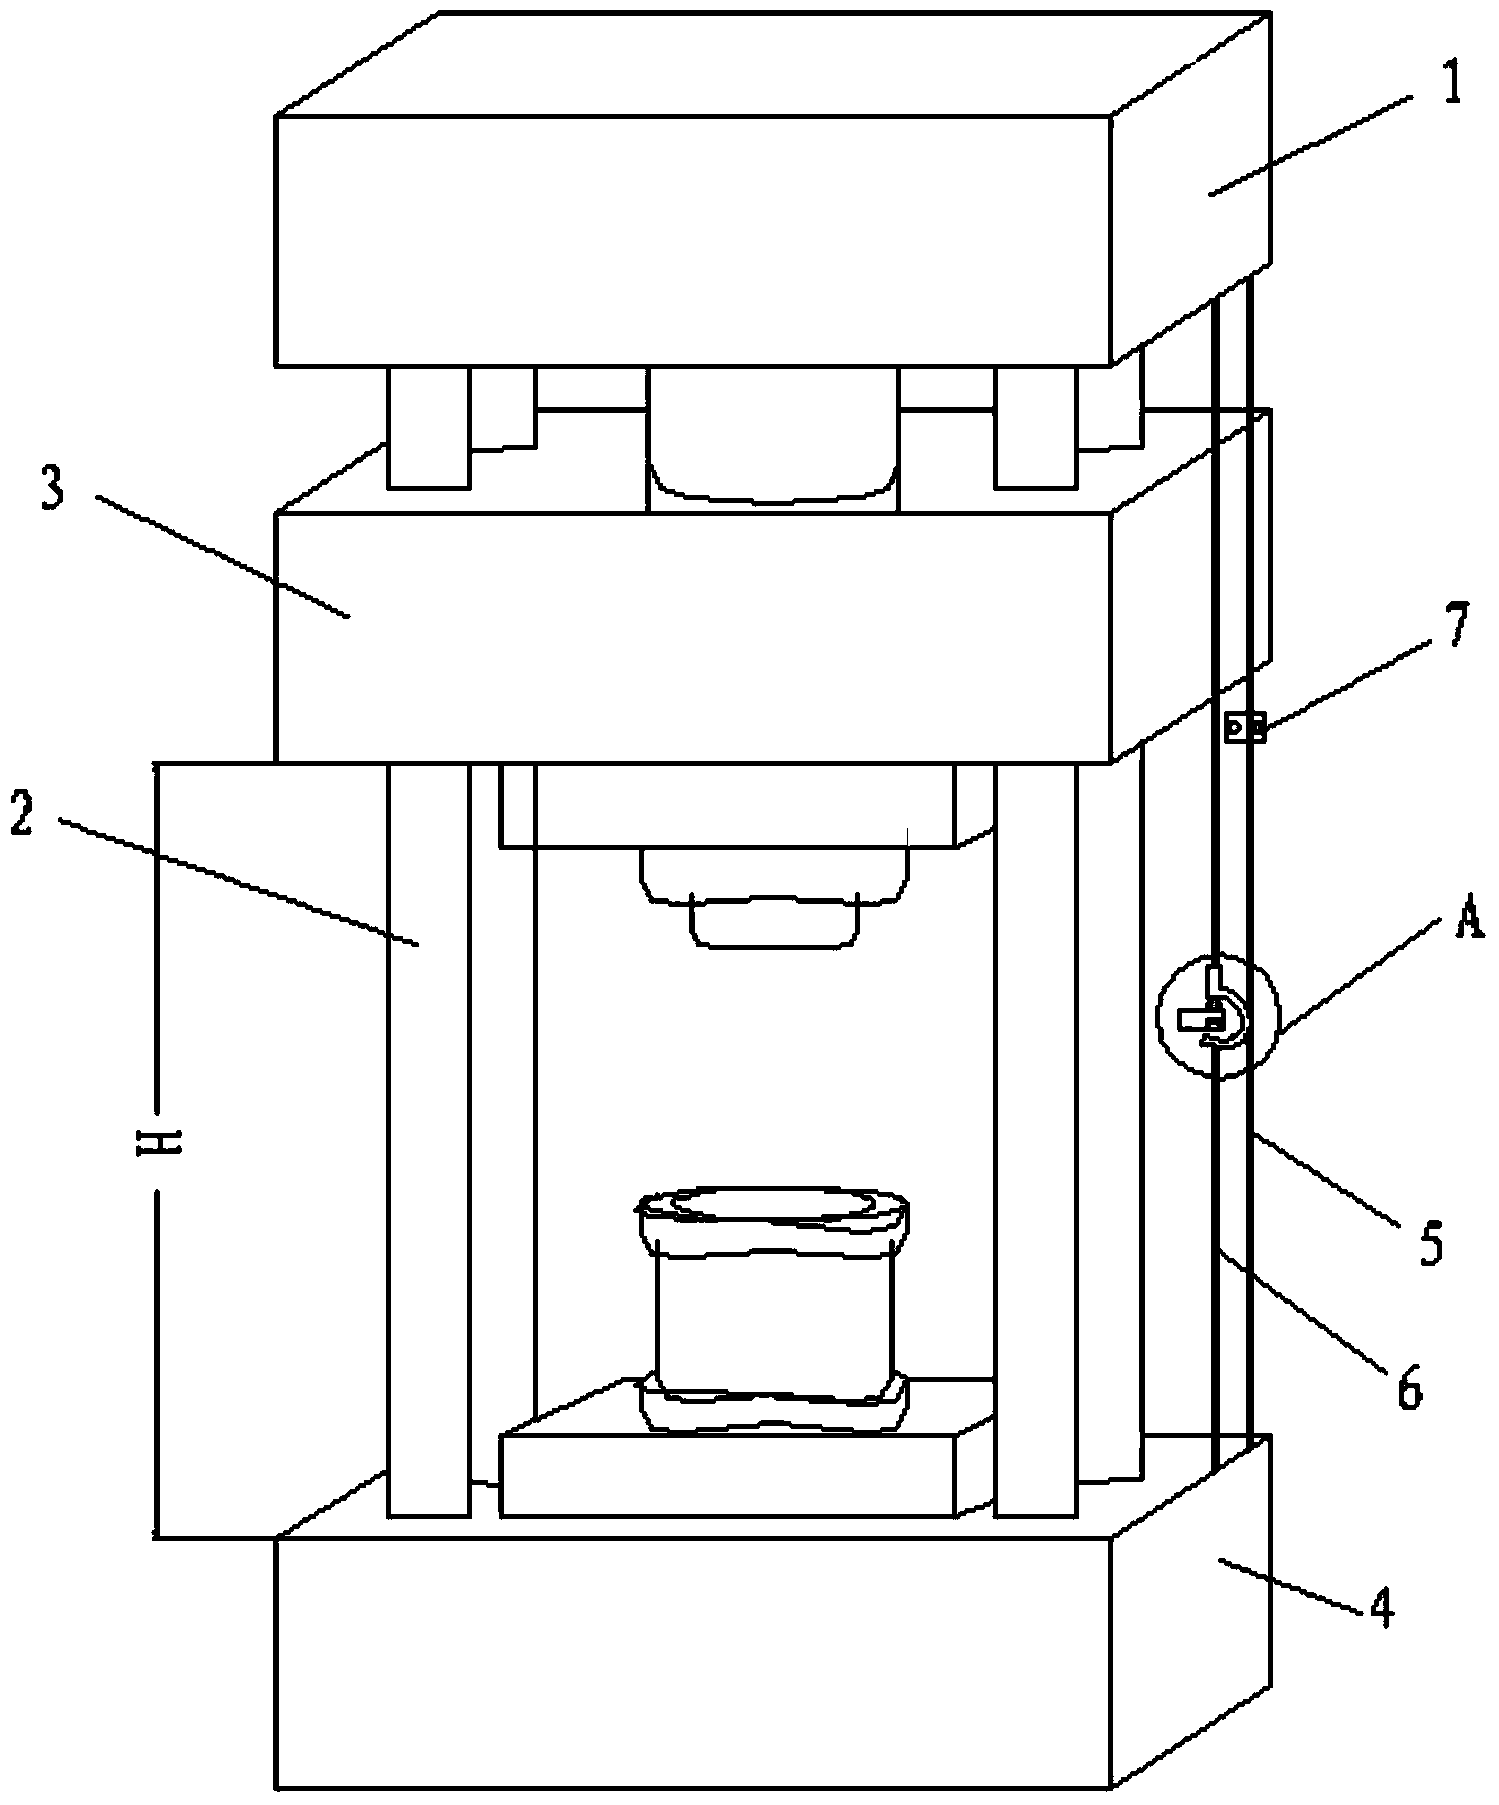 Fine adjustment device for stroke of hydraulic oil press